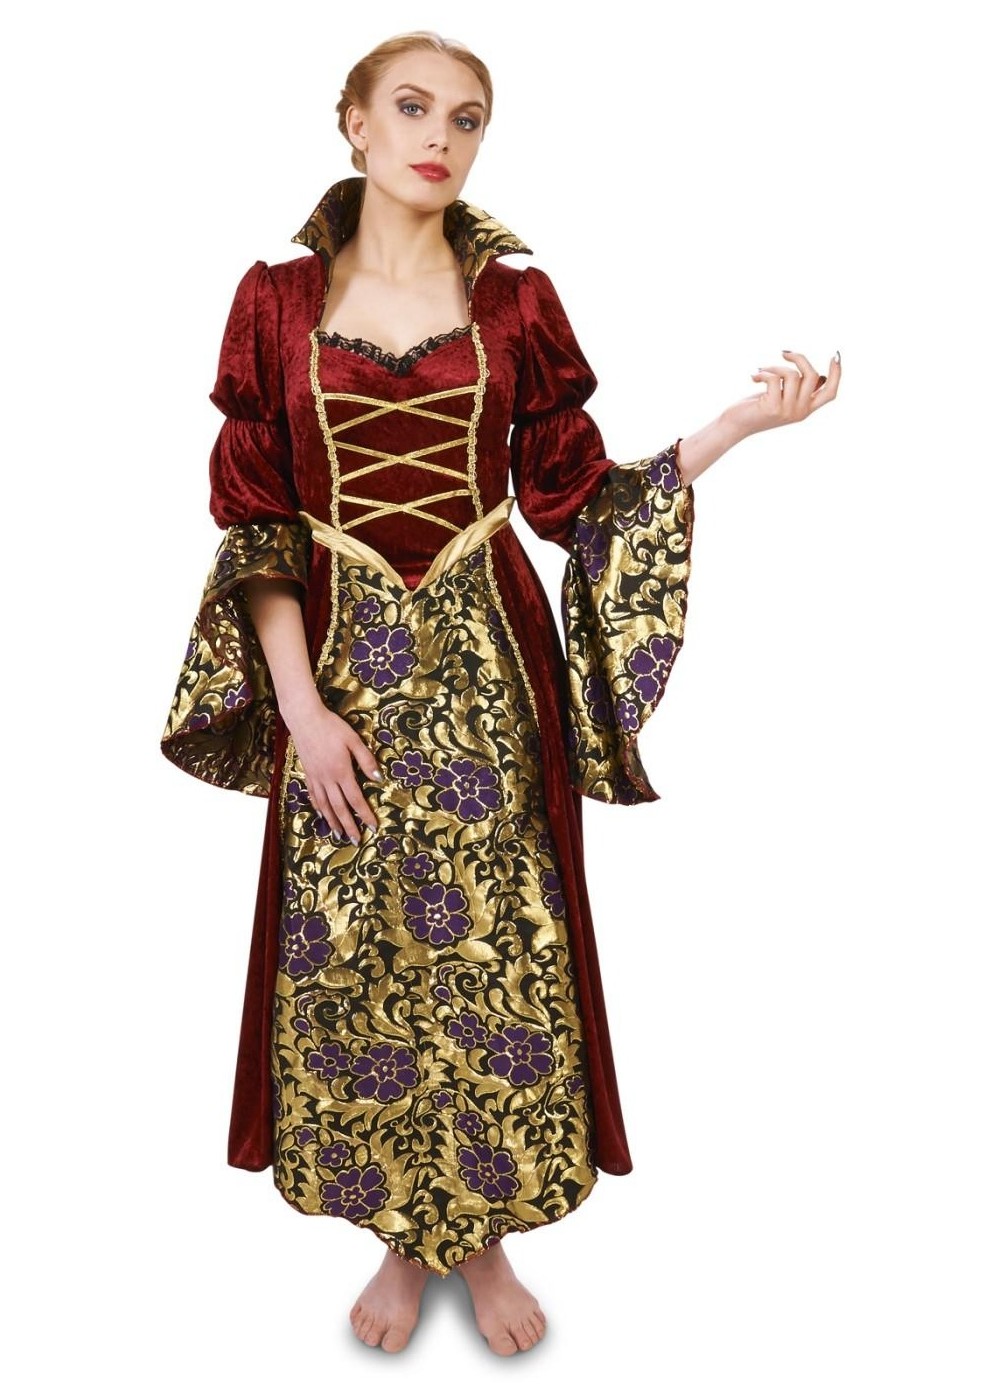 Medieval Queen Costume